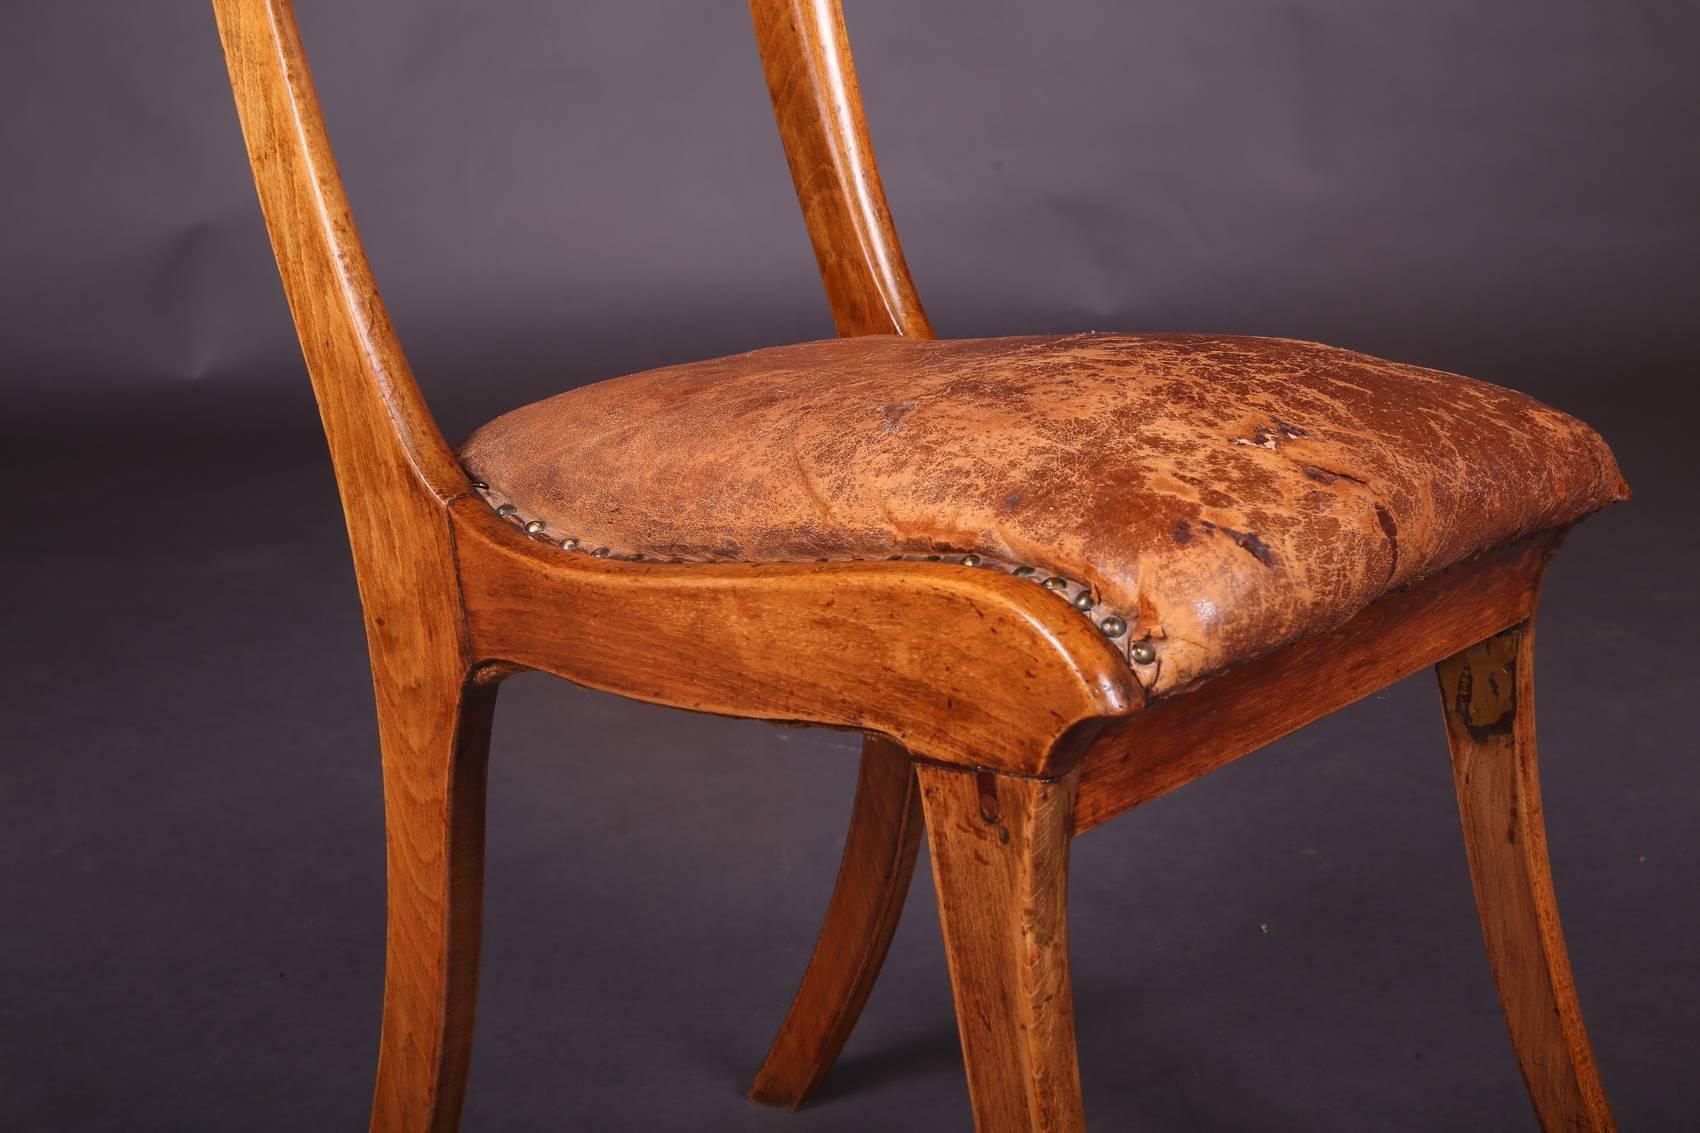 19th Century Empire Klismos Saber-Legs Chair (Holz)